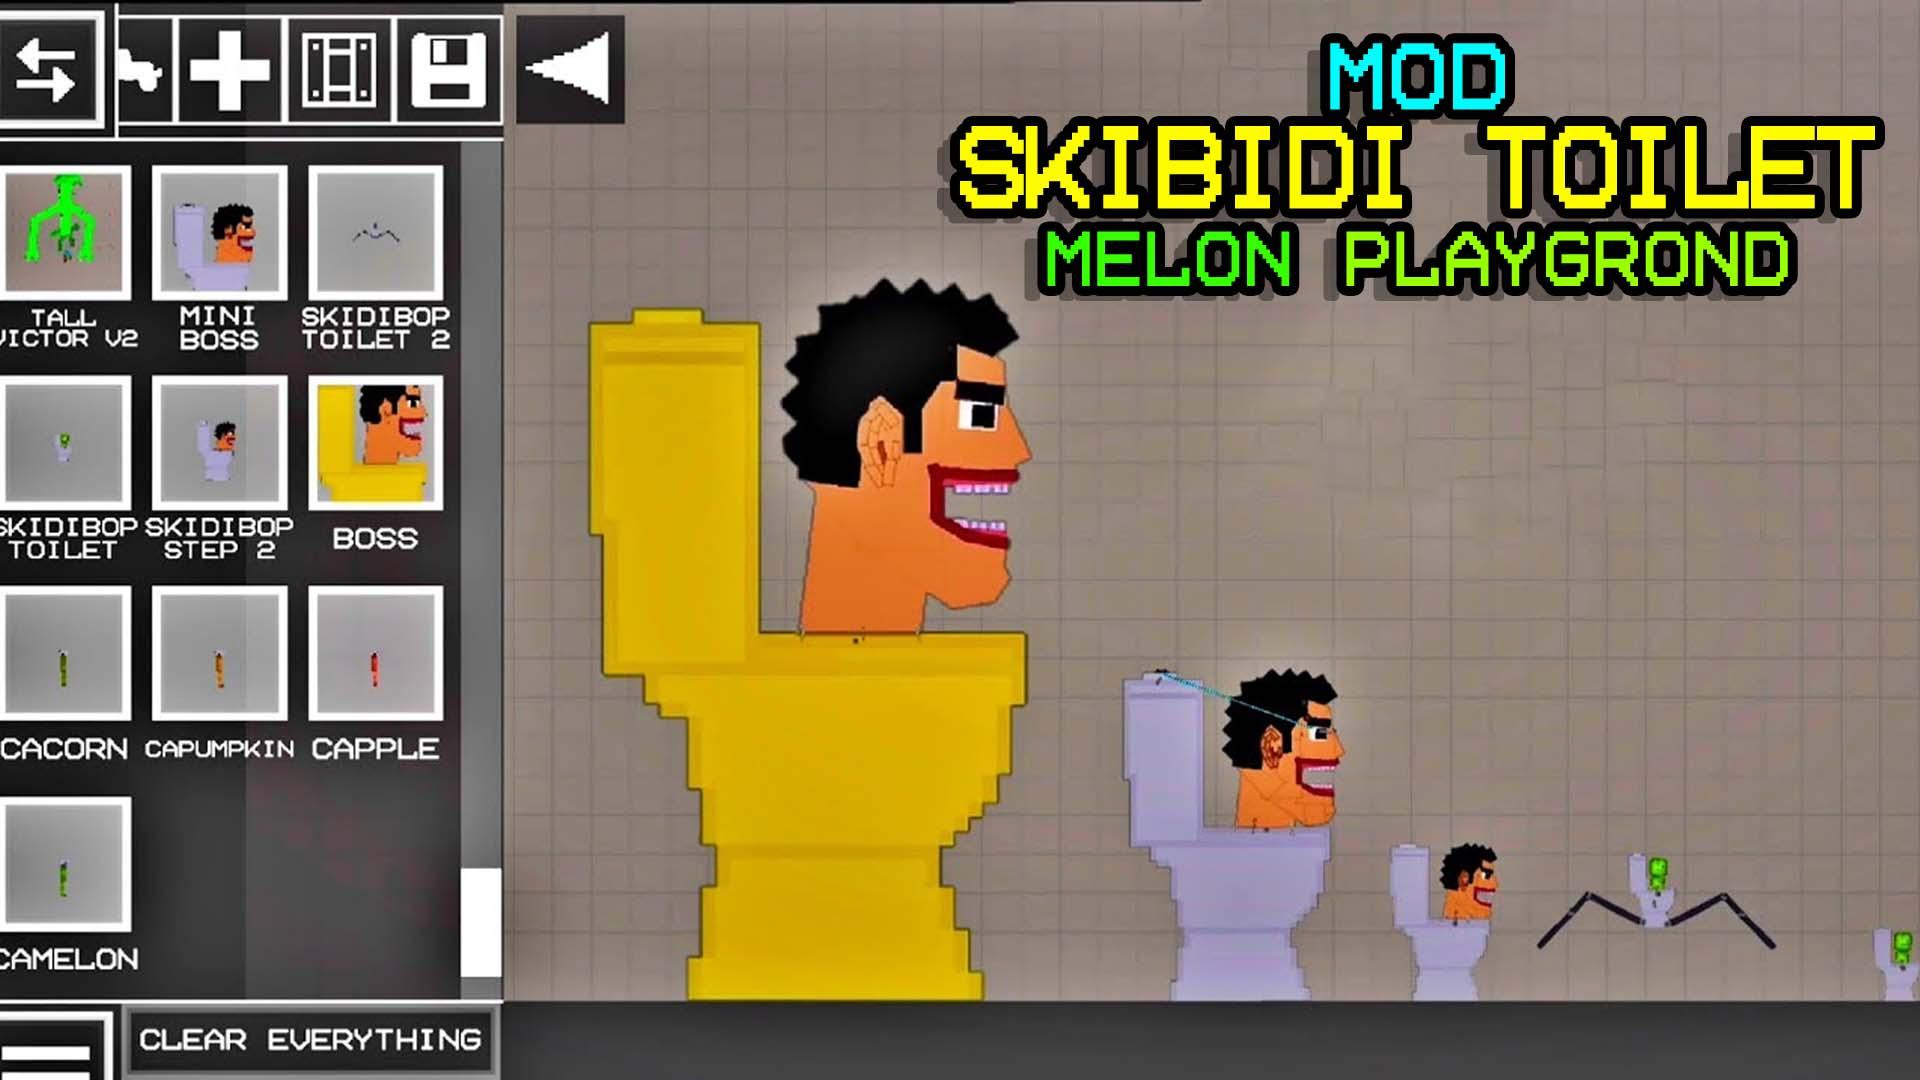 Игры скибиди телефон. Mod Melon Playground SKIBIDI Toilet. Мелон санбокс фото игры. Игрушка Мелон мод. Скибиди туалет в Мелон плейграунд.